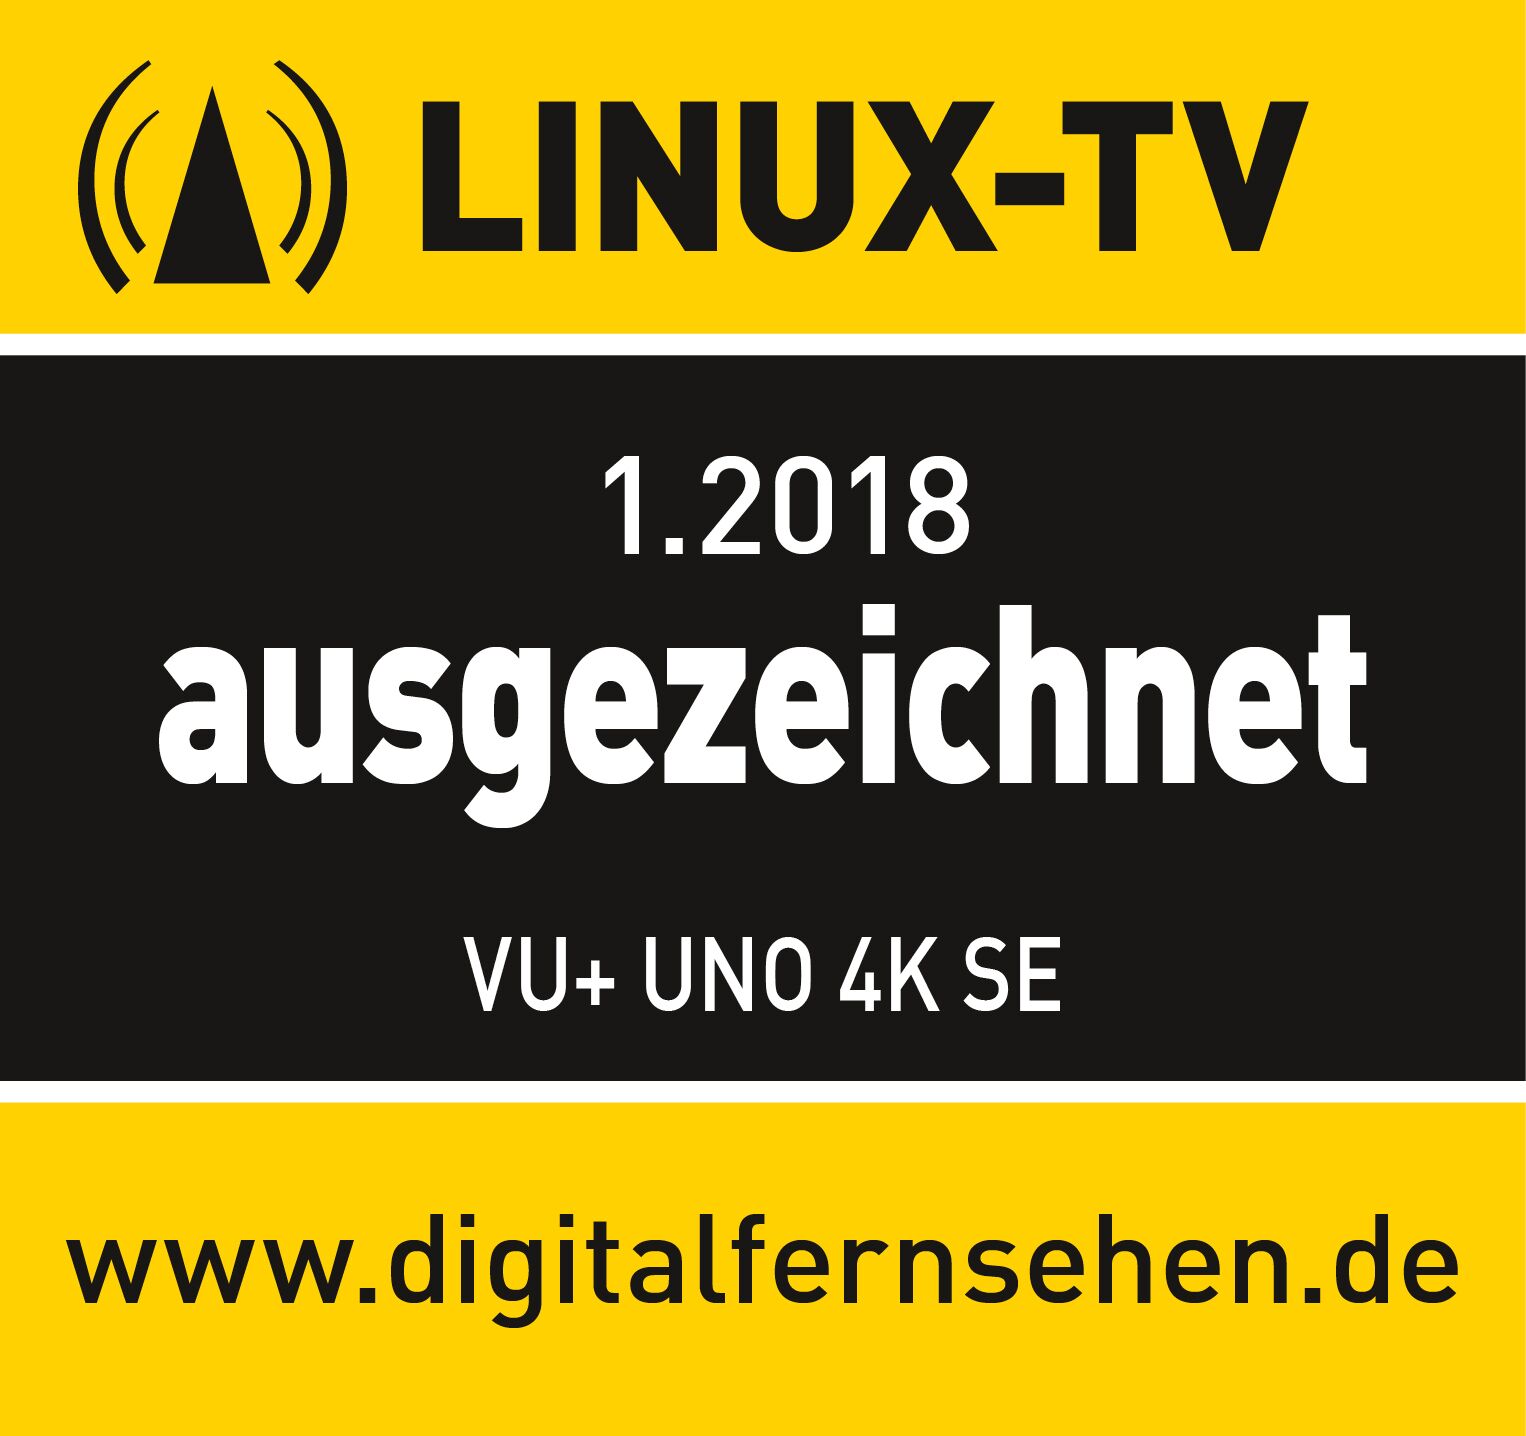 Vu+ Uno 4K SE - LinuxTV Testsiegel